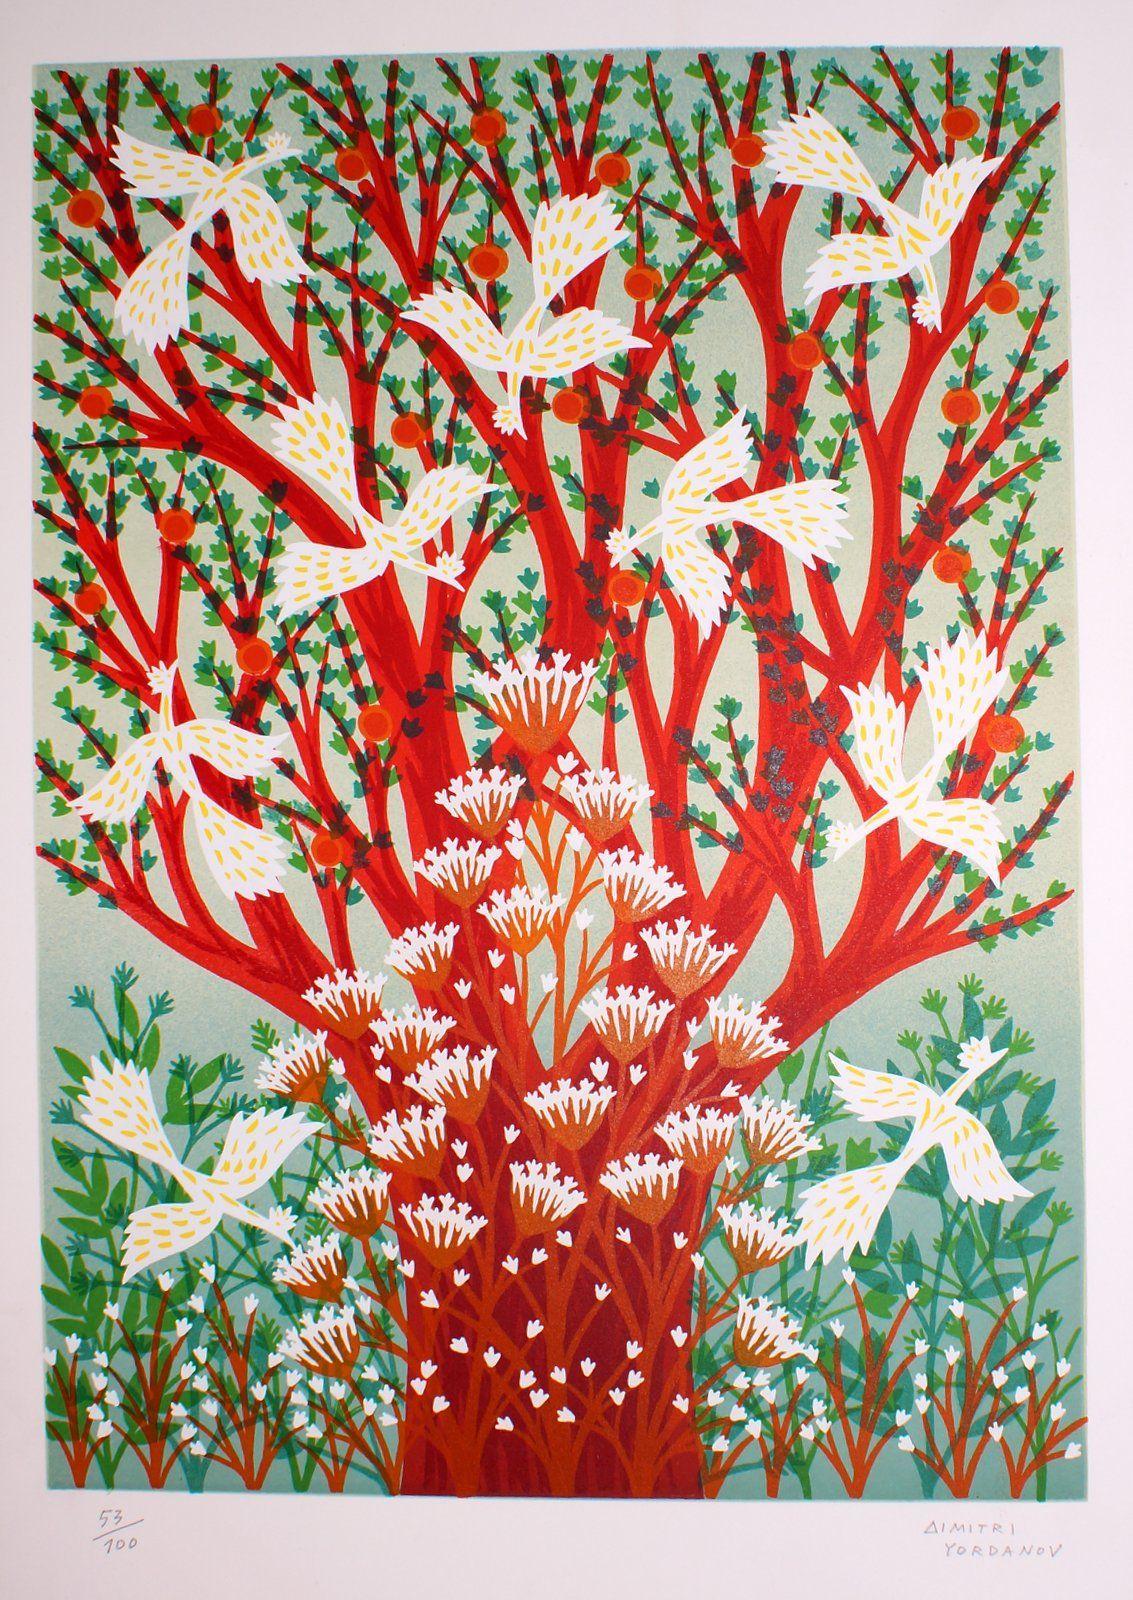 Dimitri Yordanov Figurative Print - Woodland - Original Screen Print by D. Yordanov - 1970 ca.